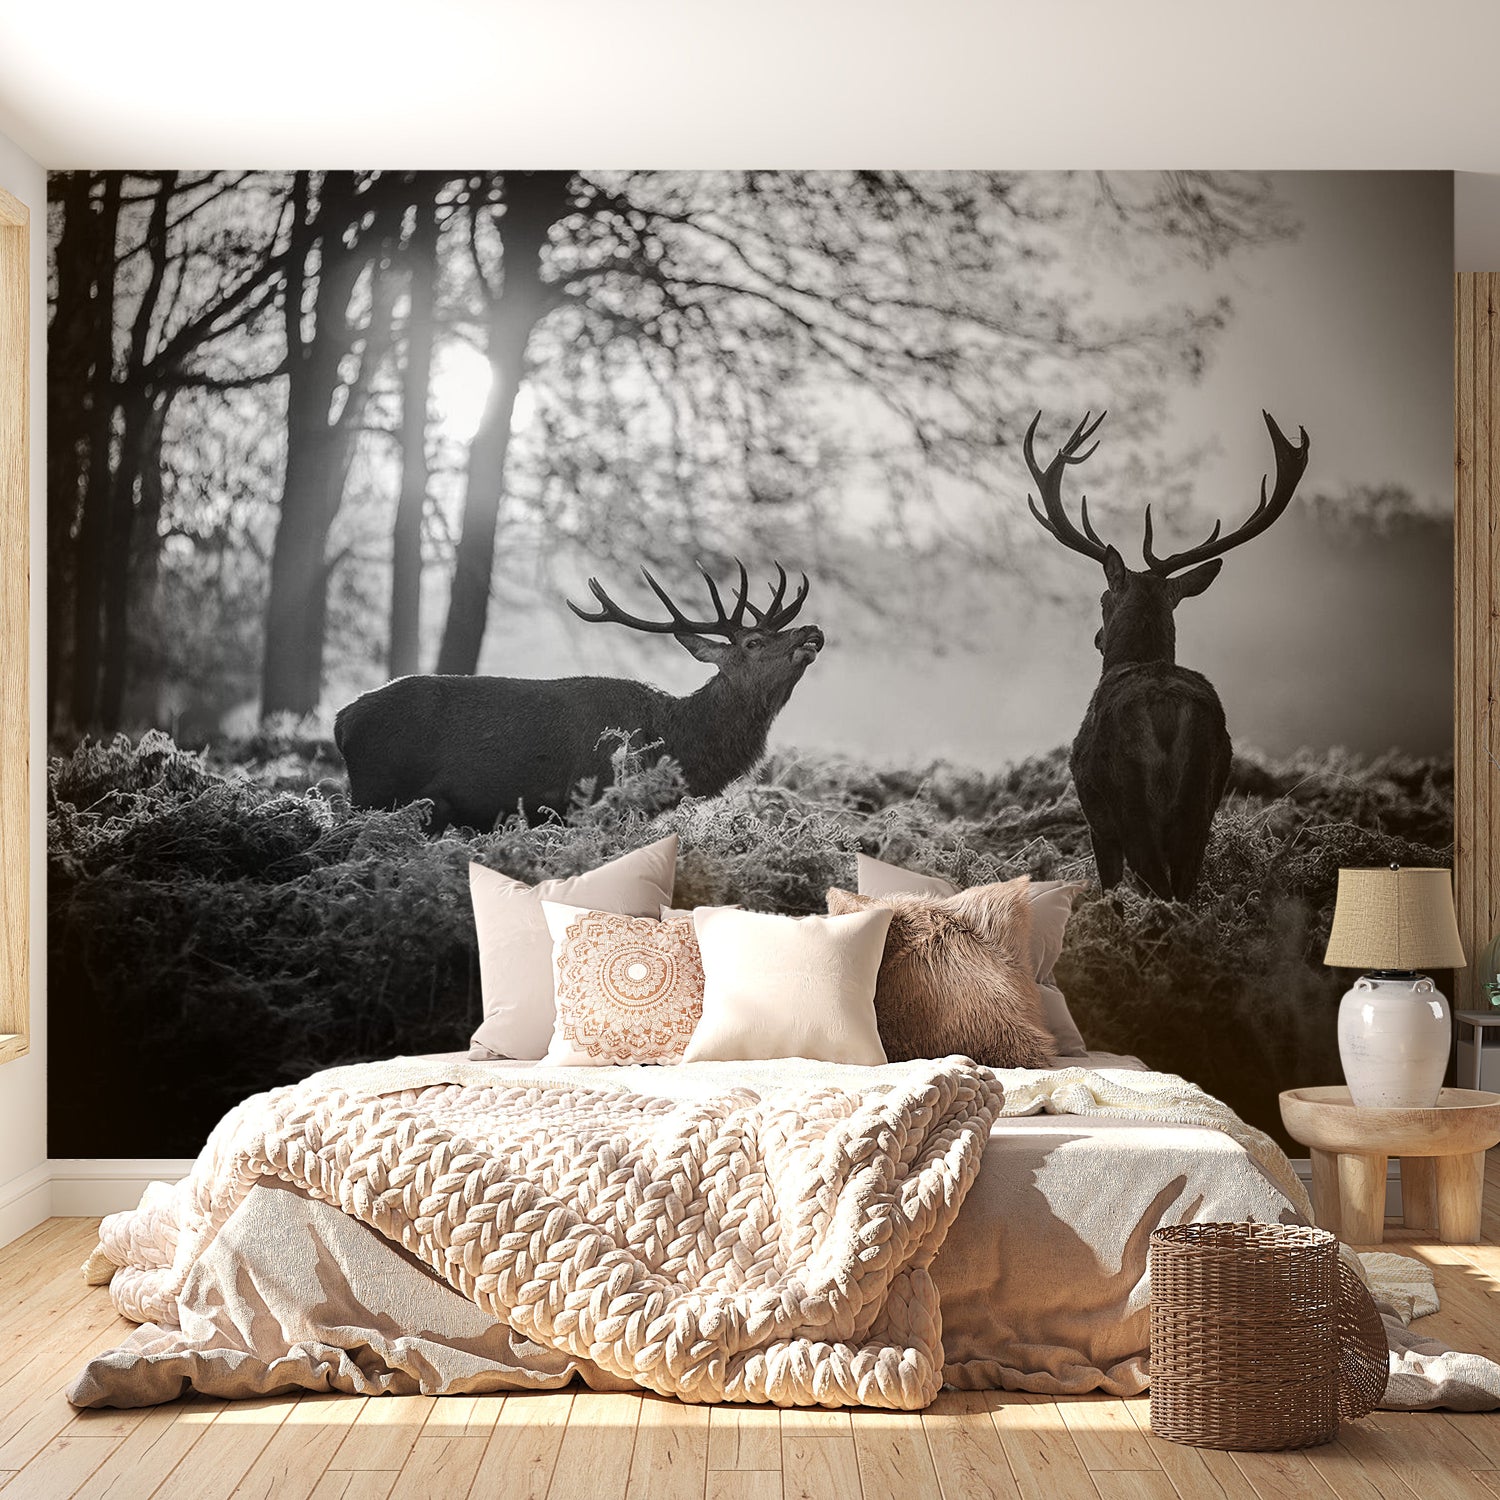 Animal Wallpaper Wall Mural - Deers In The Morning